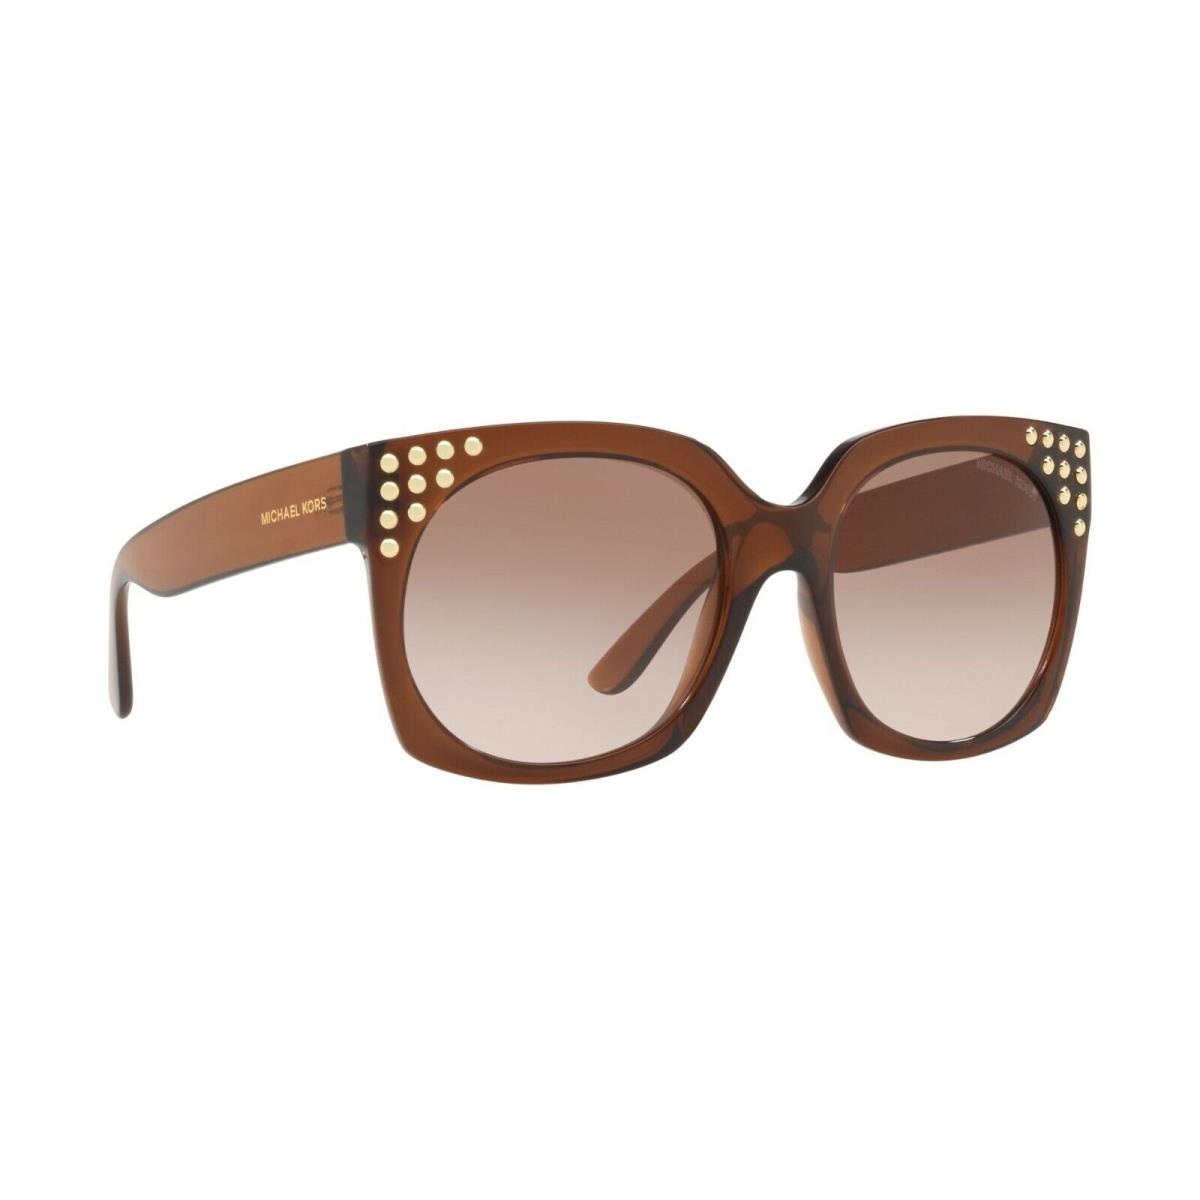 Michael Kors sunglasses  - Brown , Transparent brown and gold Frame, Brown grey Gradient Lens 8